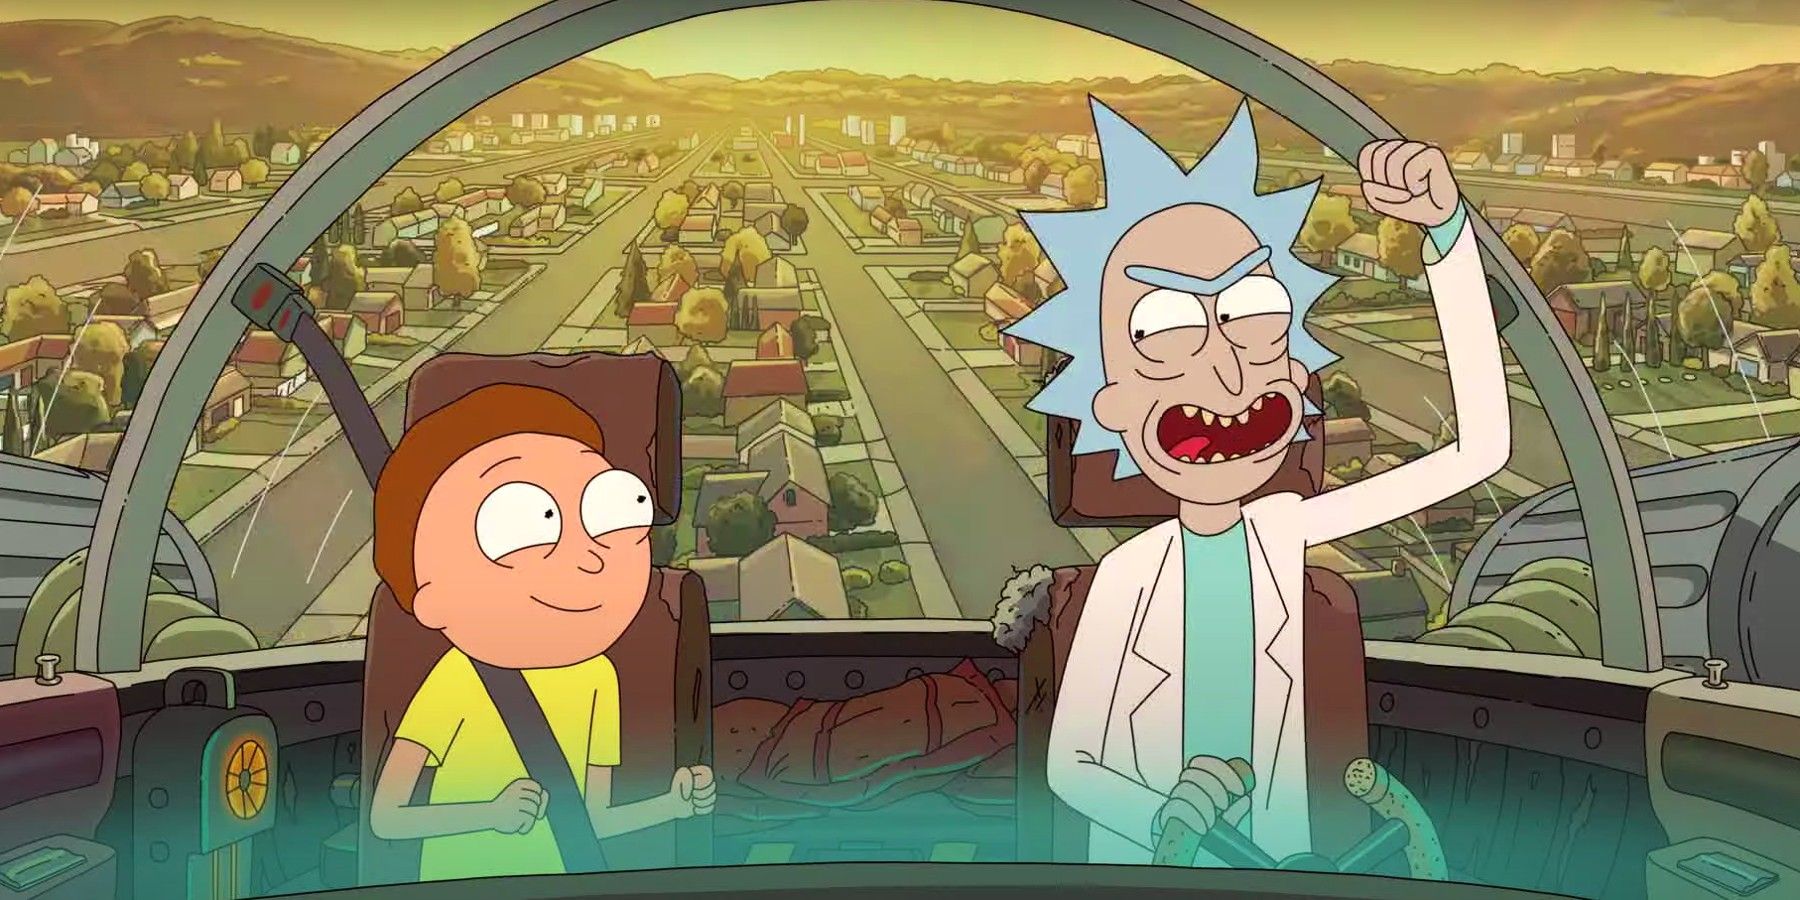 Rick And Morty' Season 6 Premiere Draws More Than 1 Million Viewers